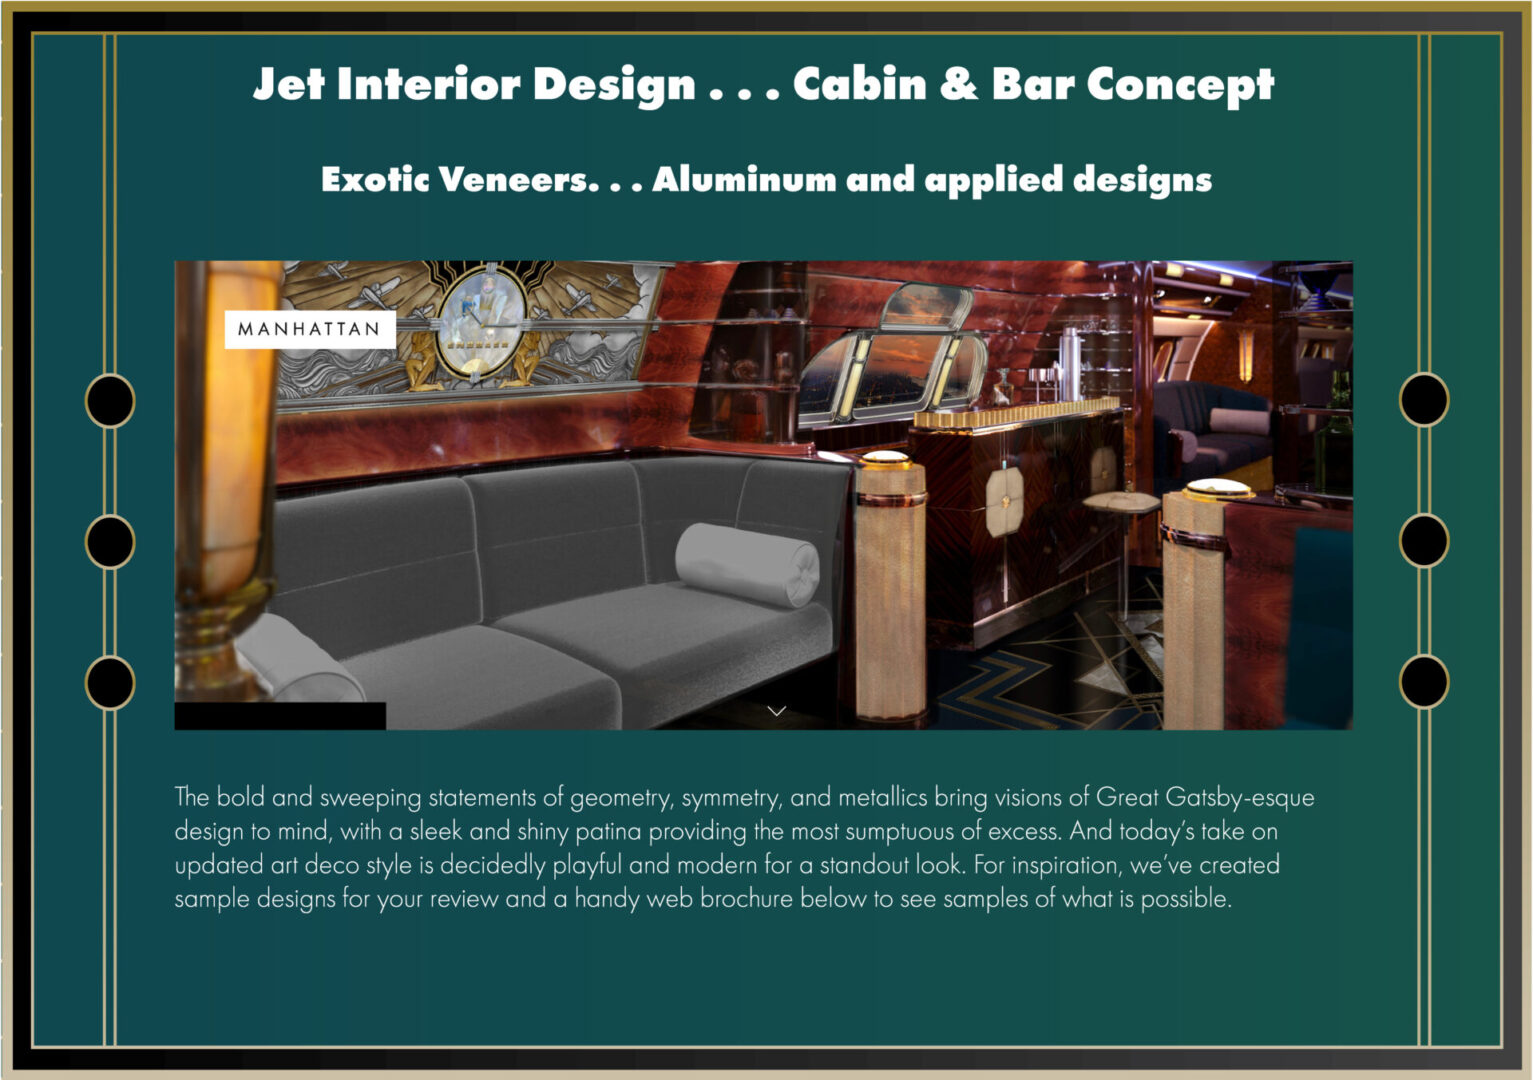 Jet Interior Design with Exotic Veneers